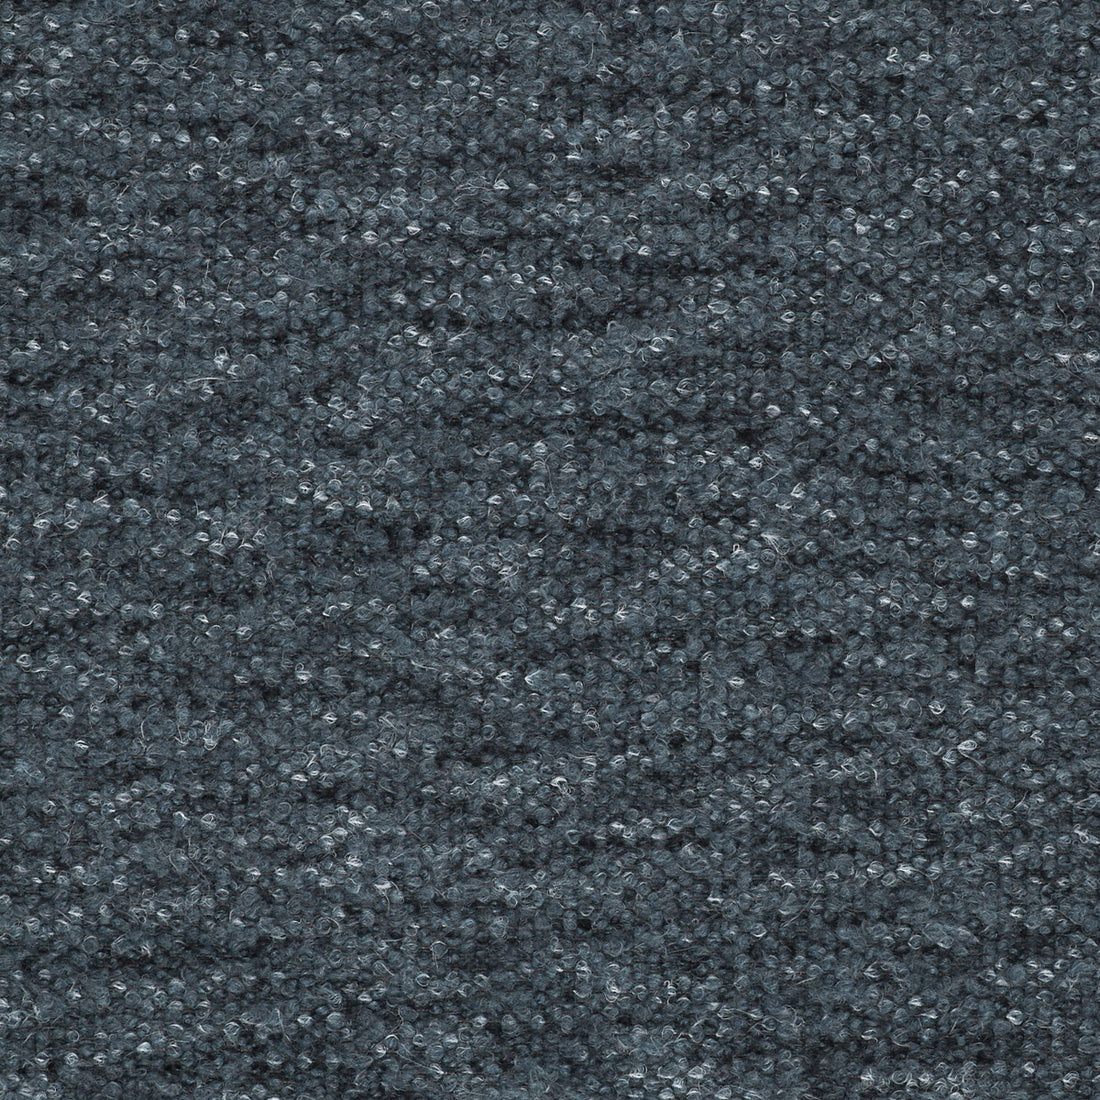 Favila fabric in azul color - pattern LCT1004.004.0 - by Gaston y Daniela in the Lorenzo Castillo V collection